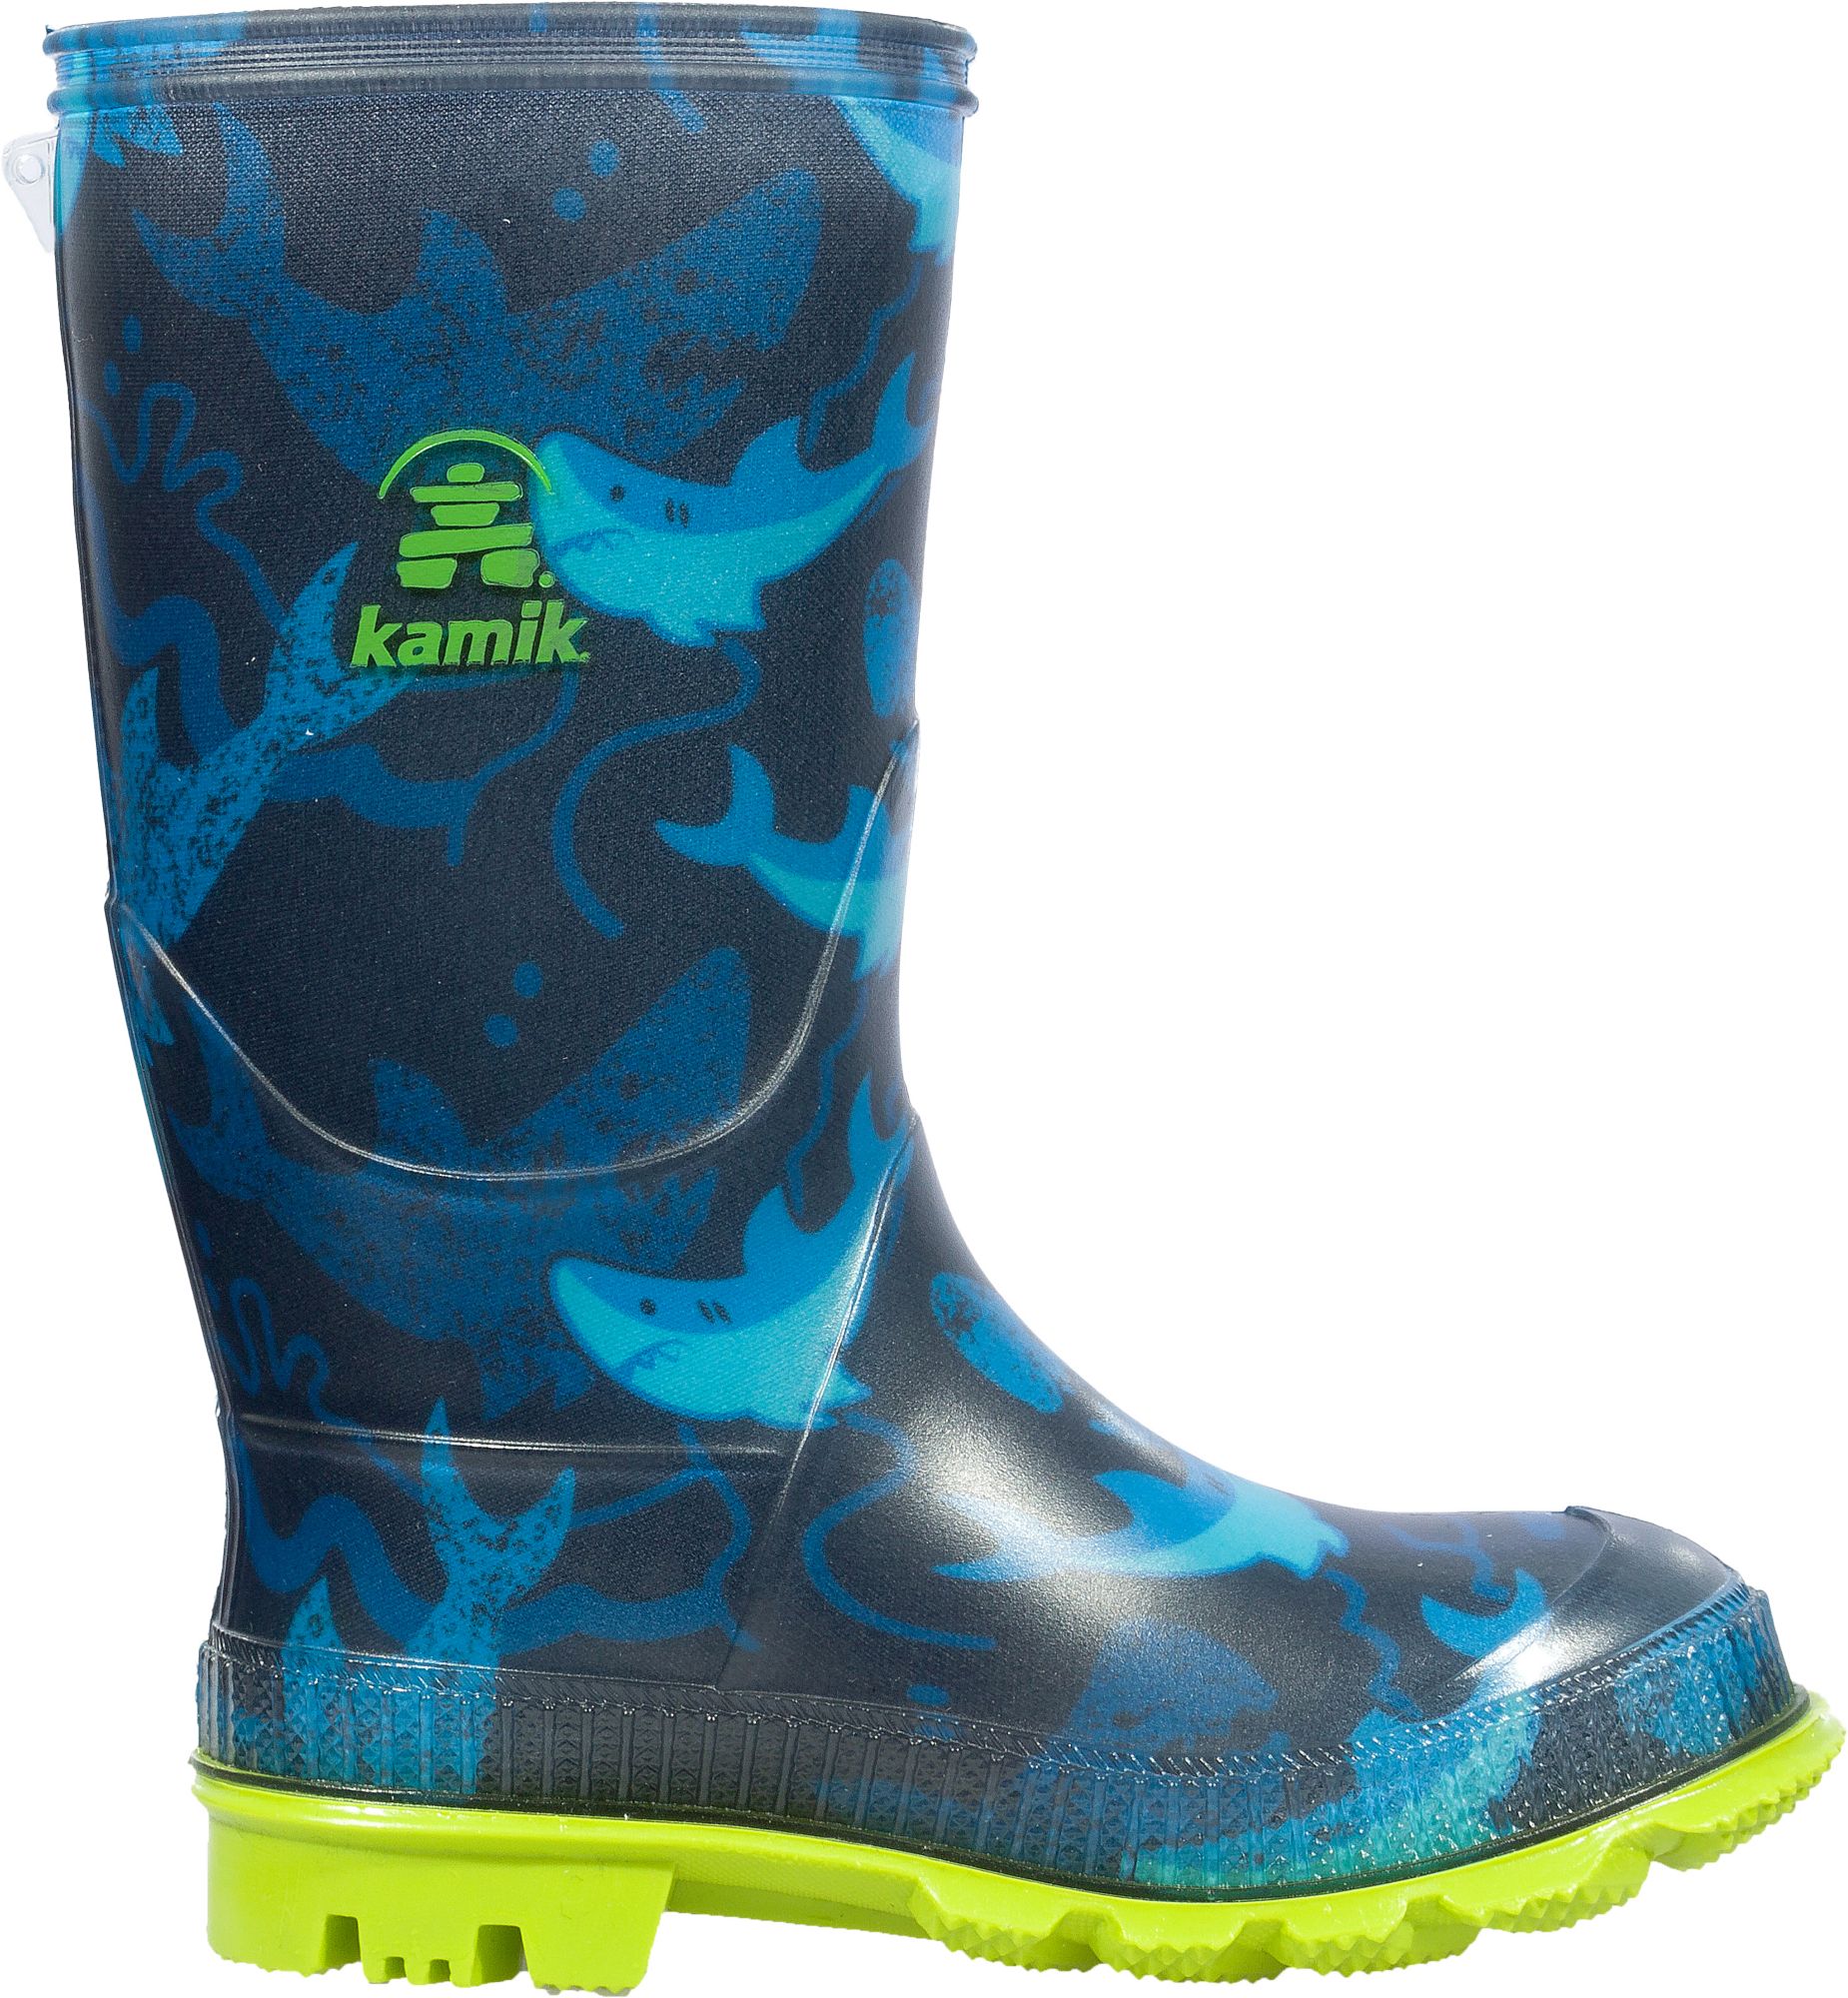 kamik stomp rain boots